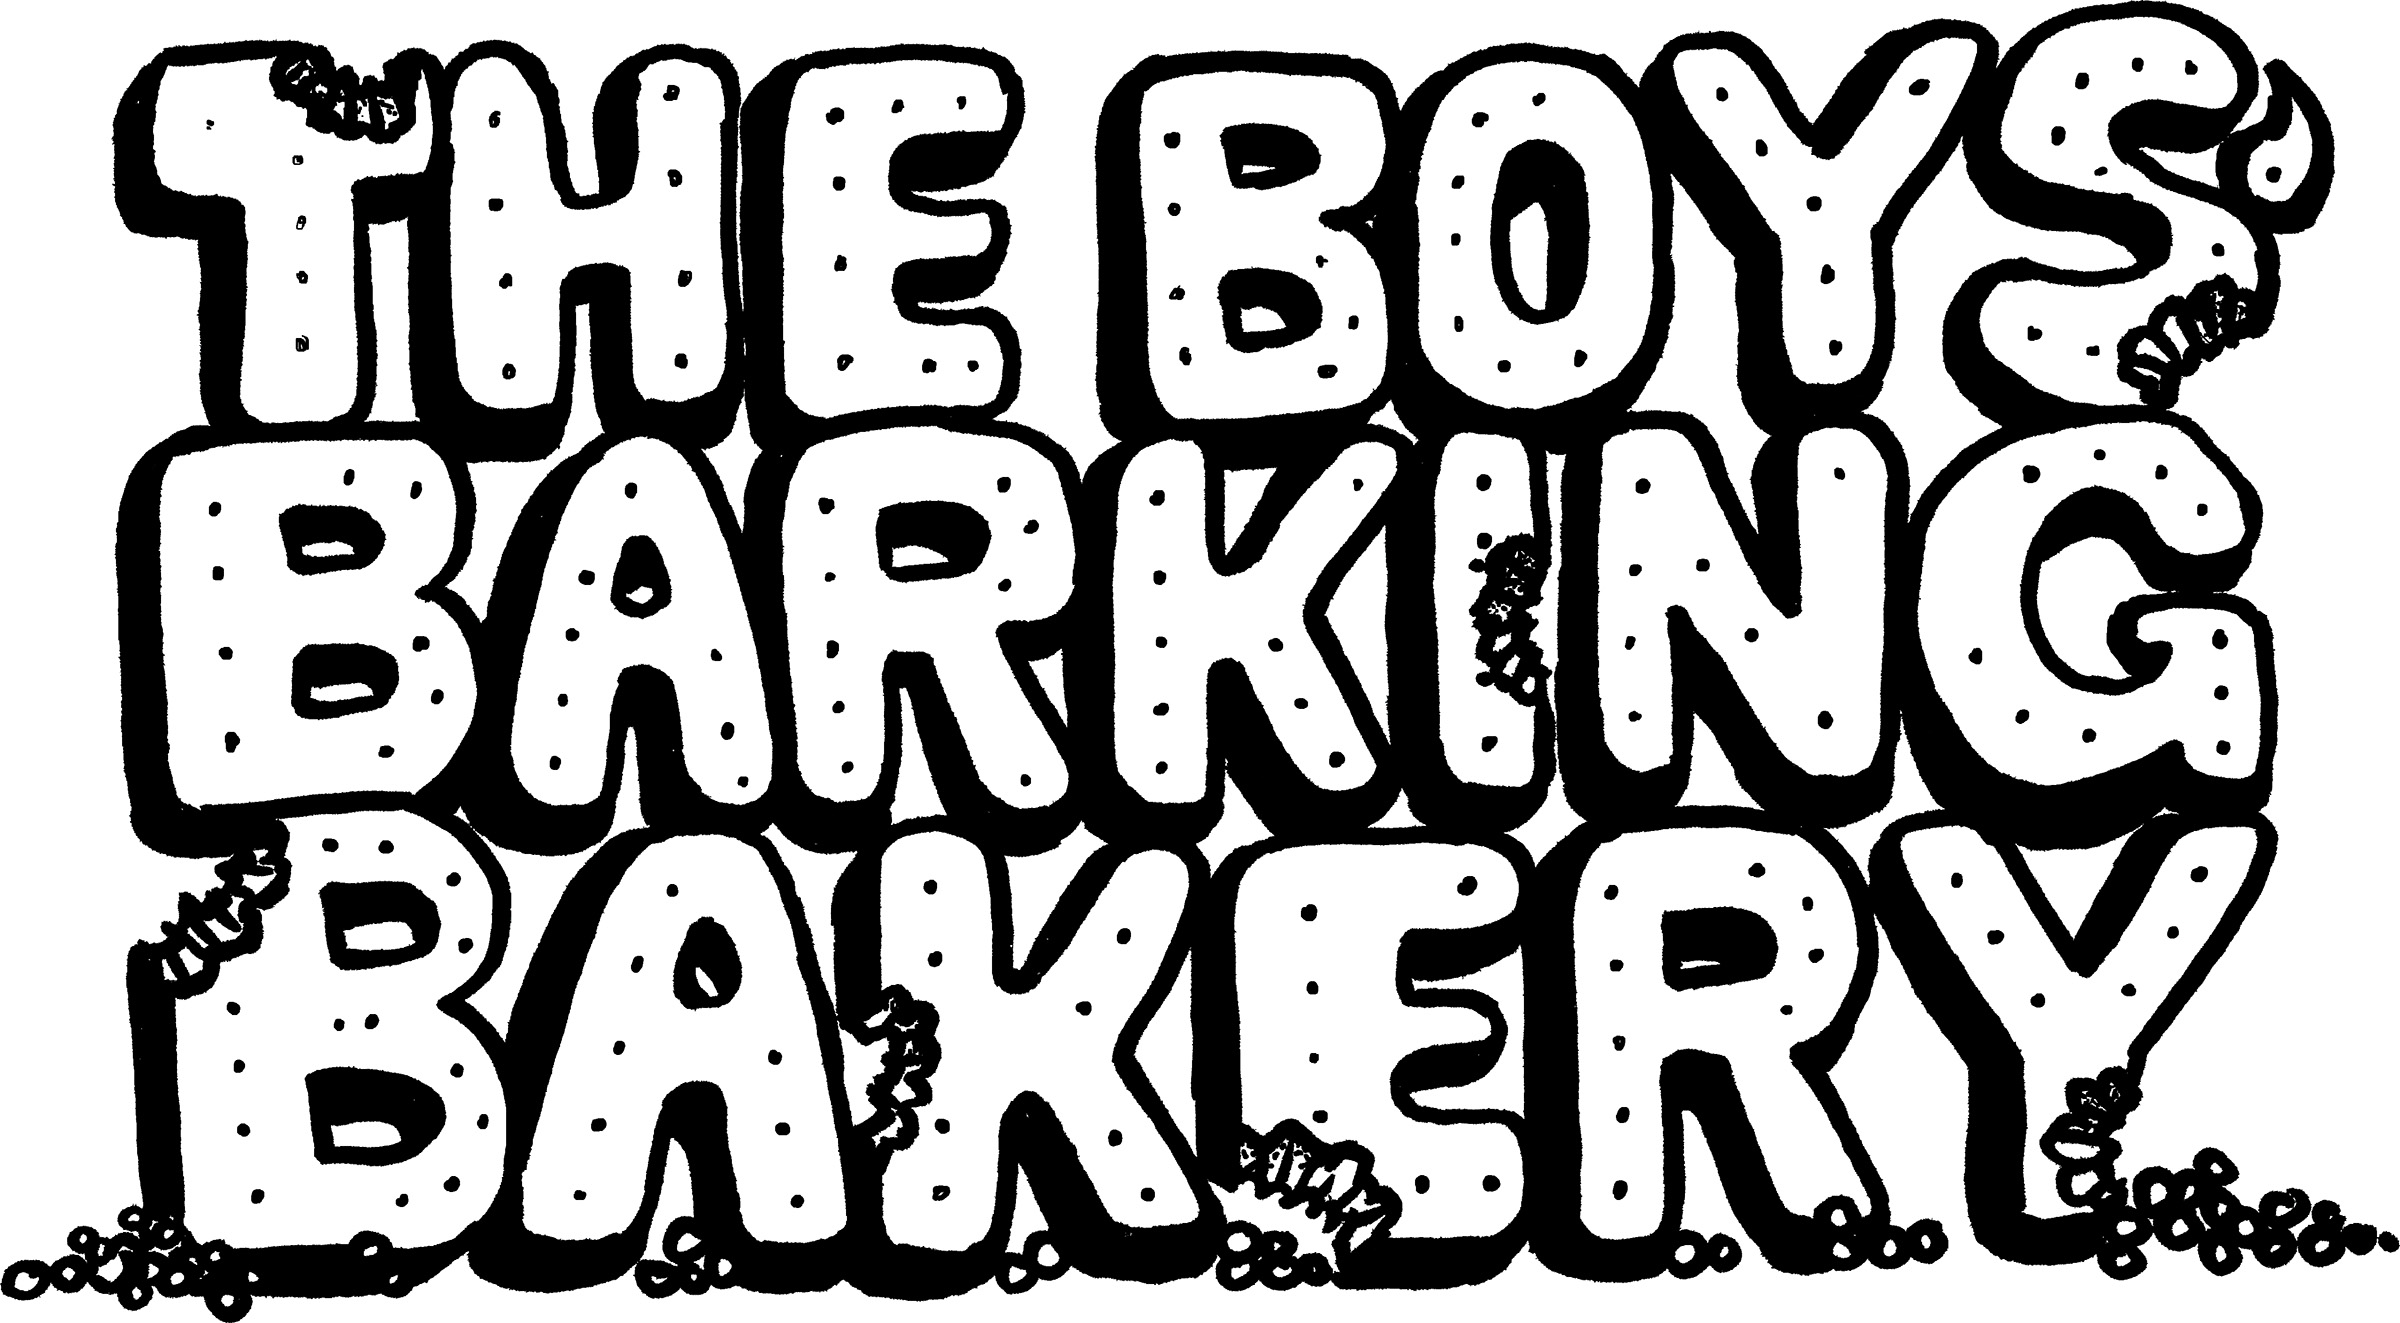 The Boys' Barking Bakery Online Store